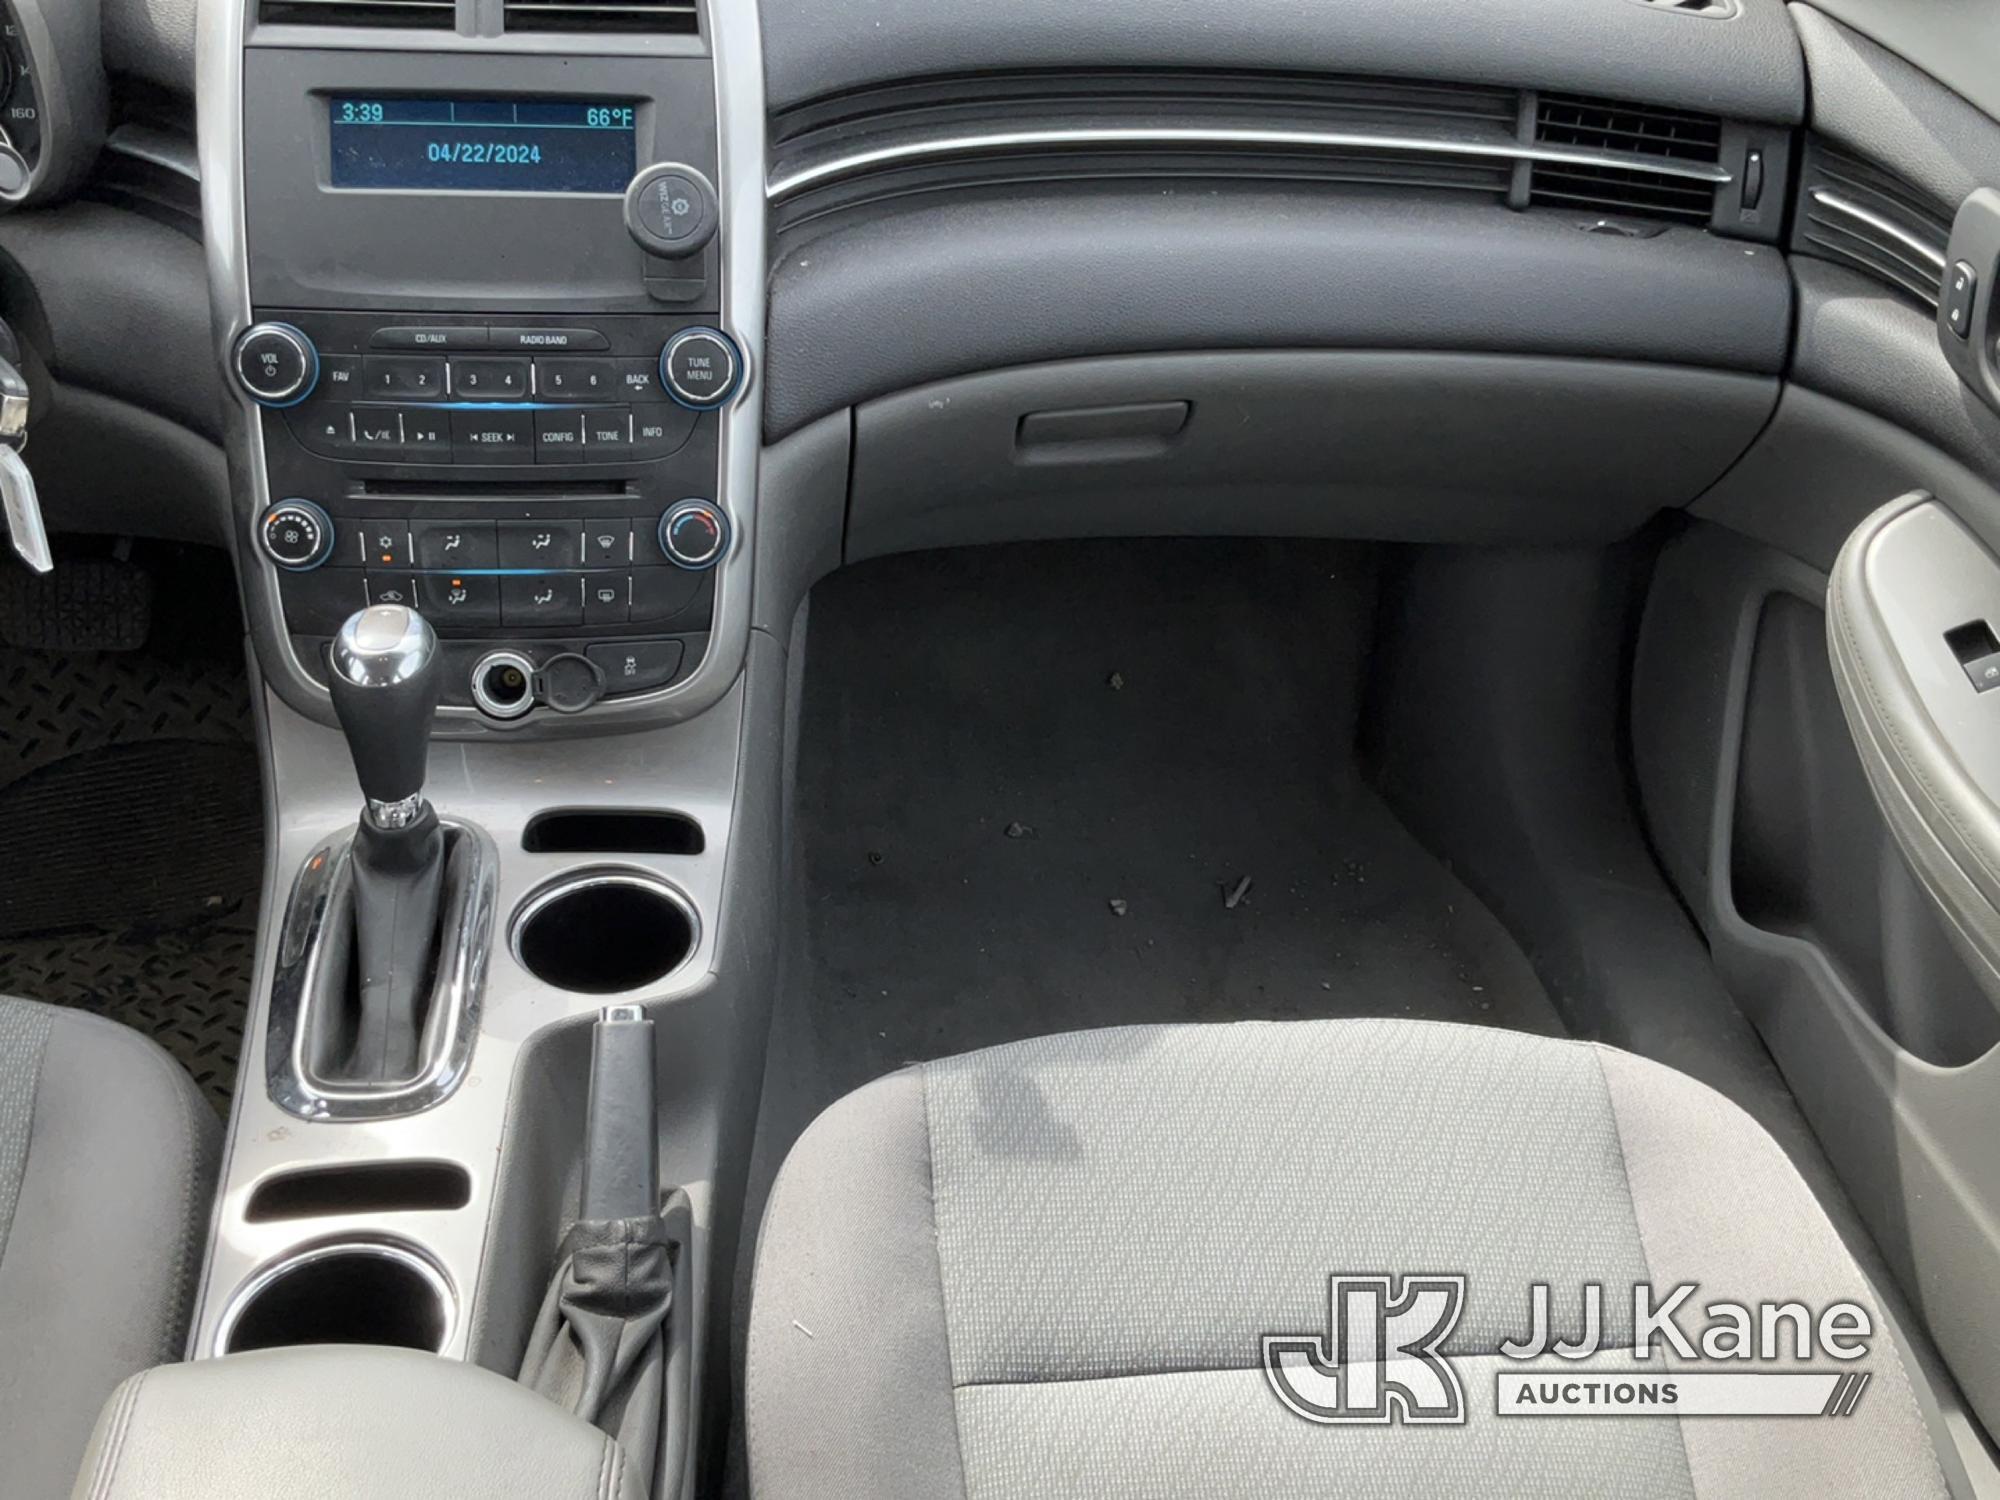 (South Beloit, IL) 2015 Chevrolet Malibu 4-Door Sedan Runs & Moves) (Paint Damage, Rust Spots